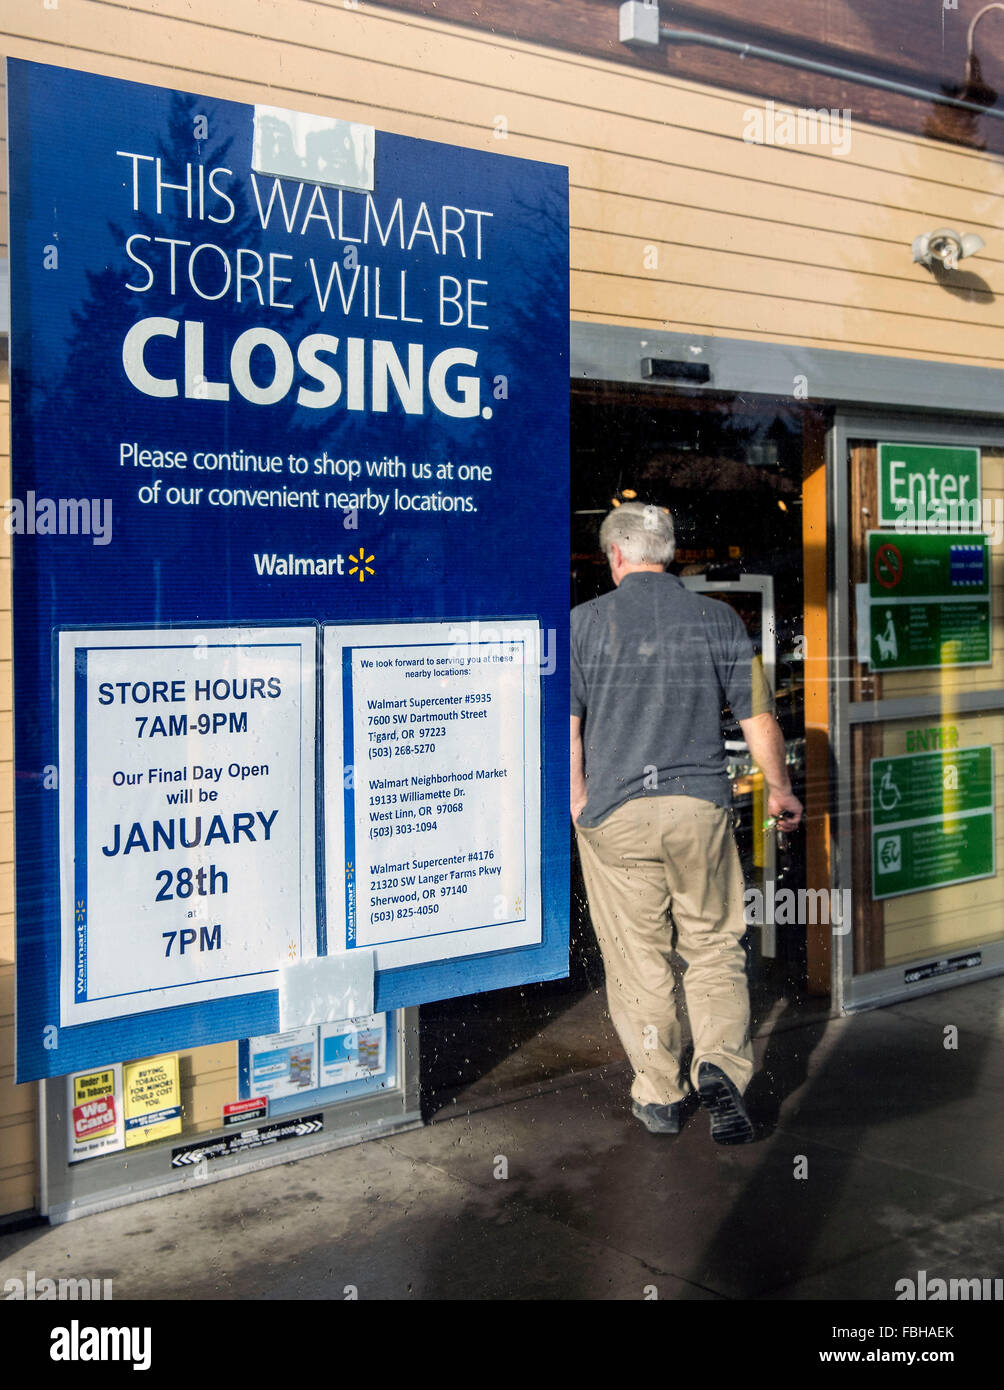 New Walmart Neighborhood Market to open in Kissimmee - Orlando Business  Journal